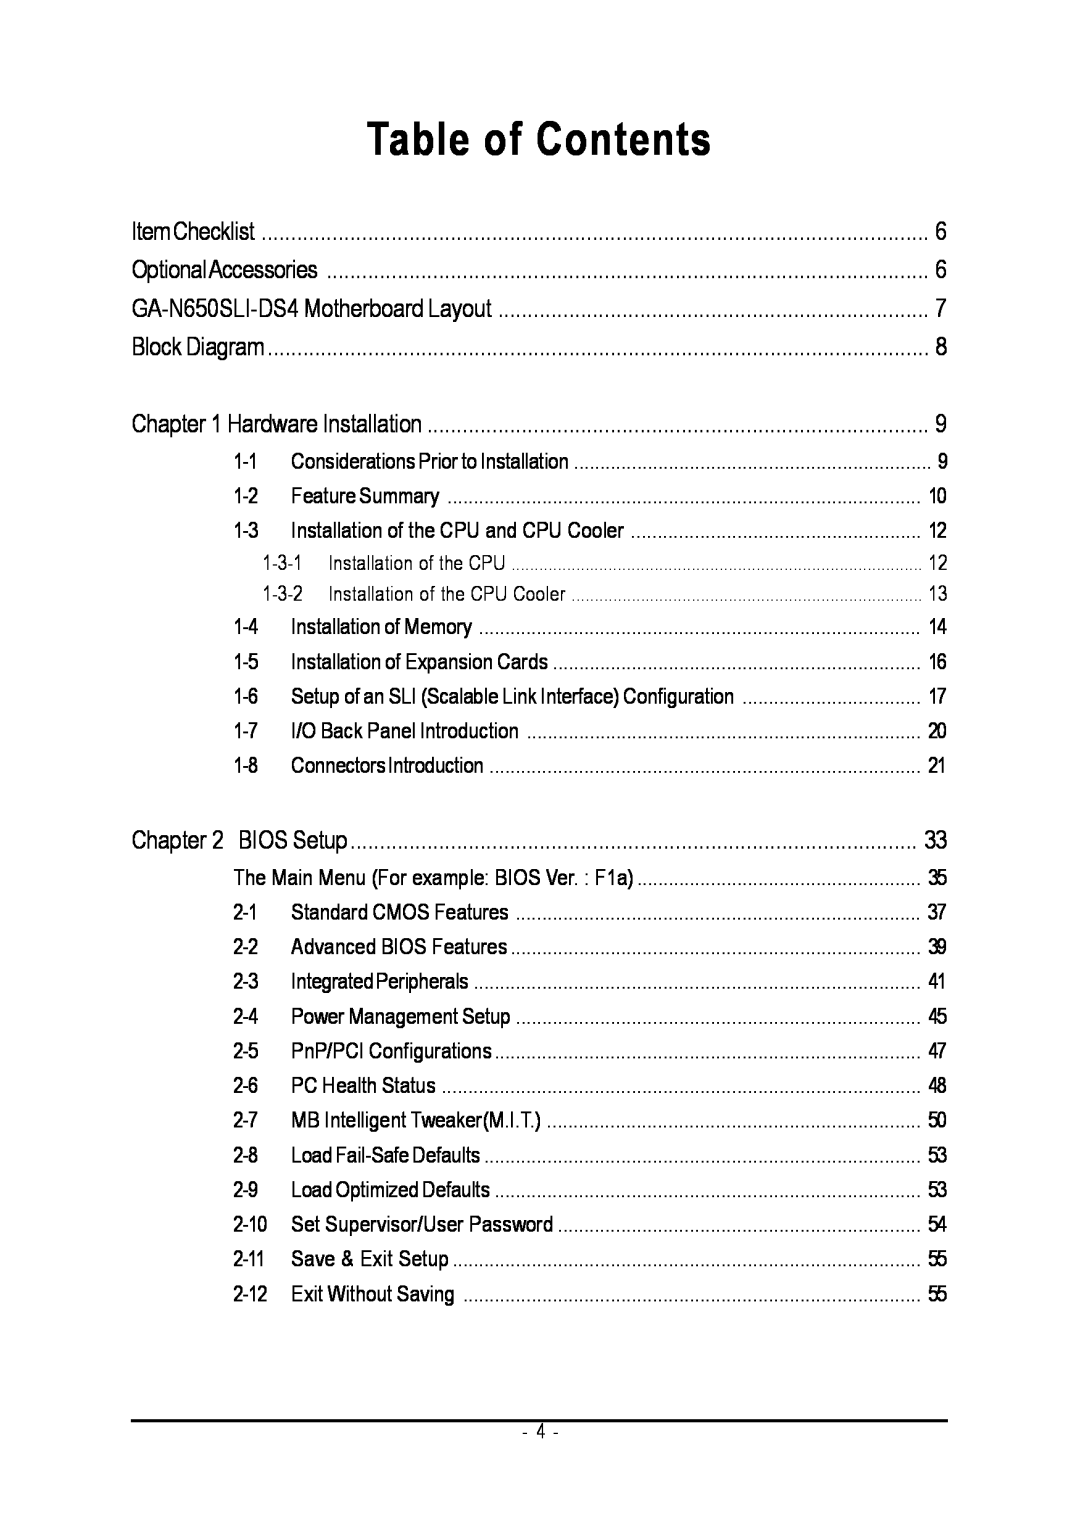 Intel GA-N650SLI-DS4 user manual Table of Contents 